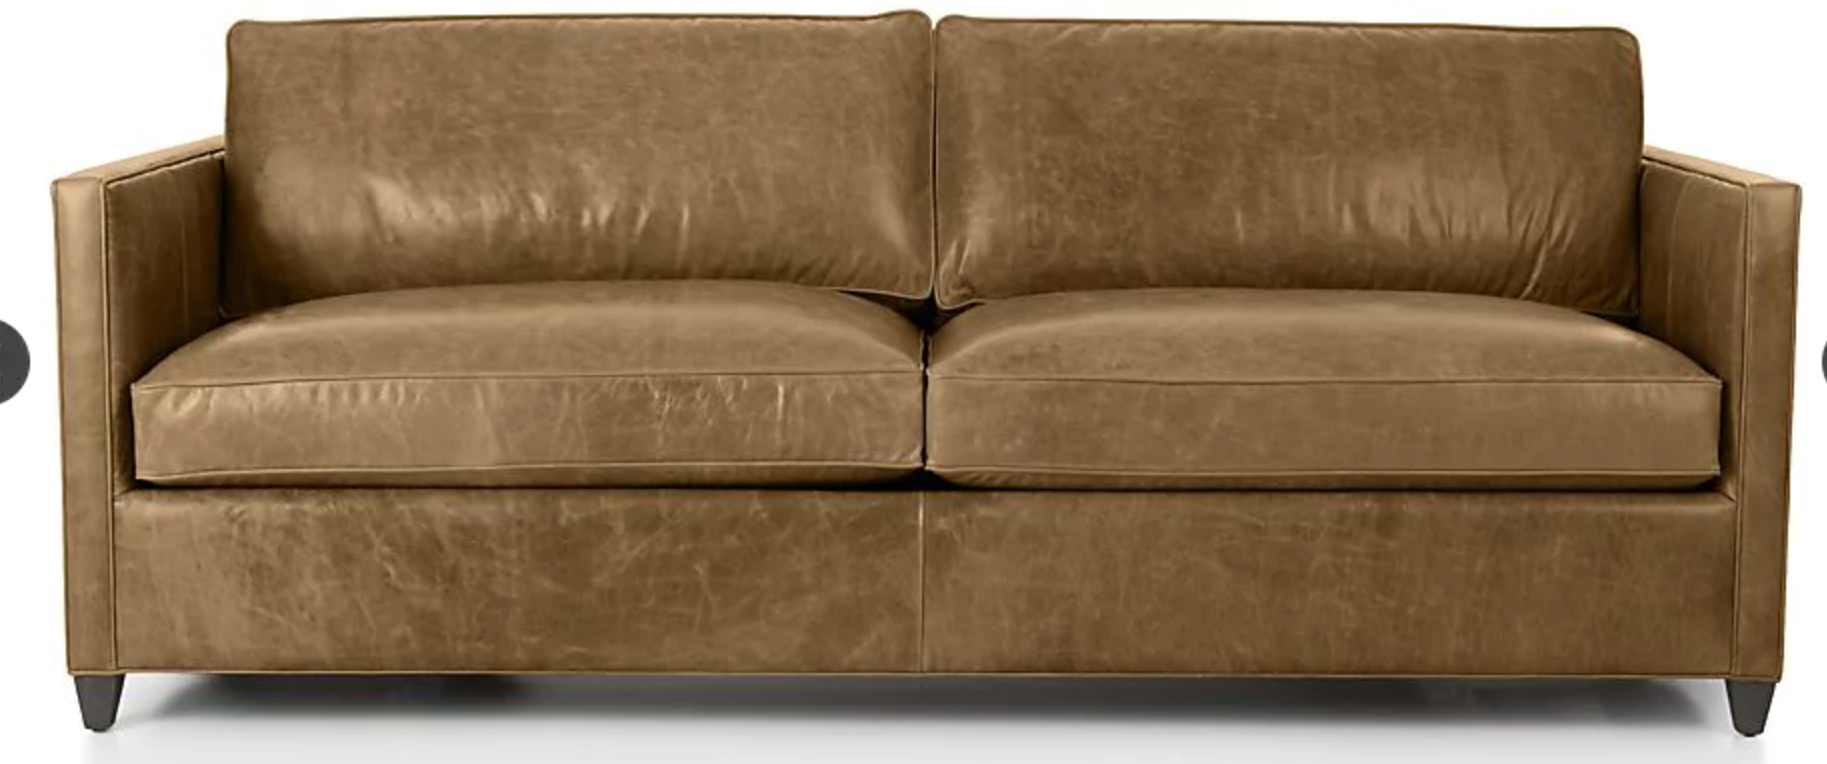 Dryden Leather Sofa - Image 0